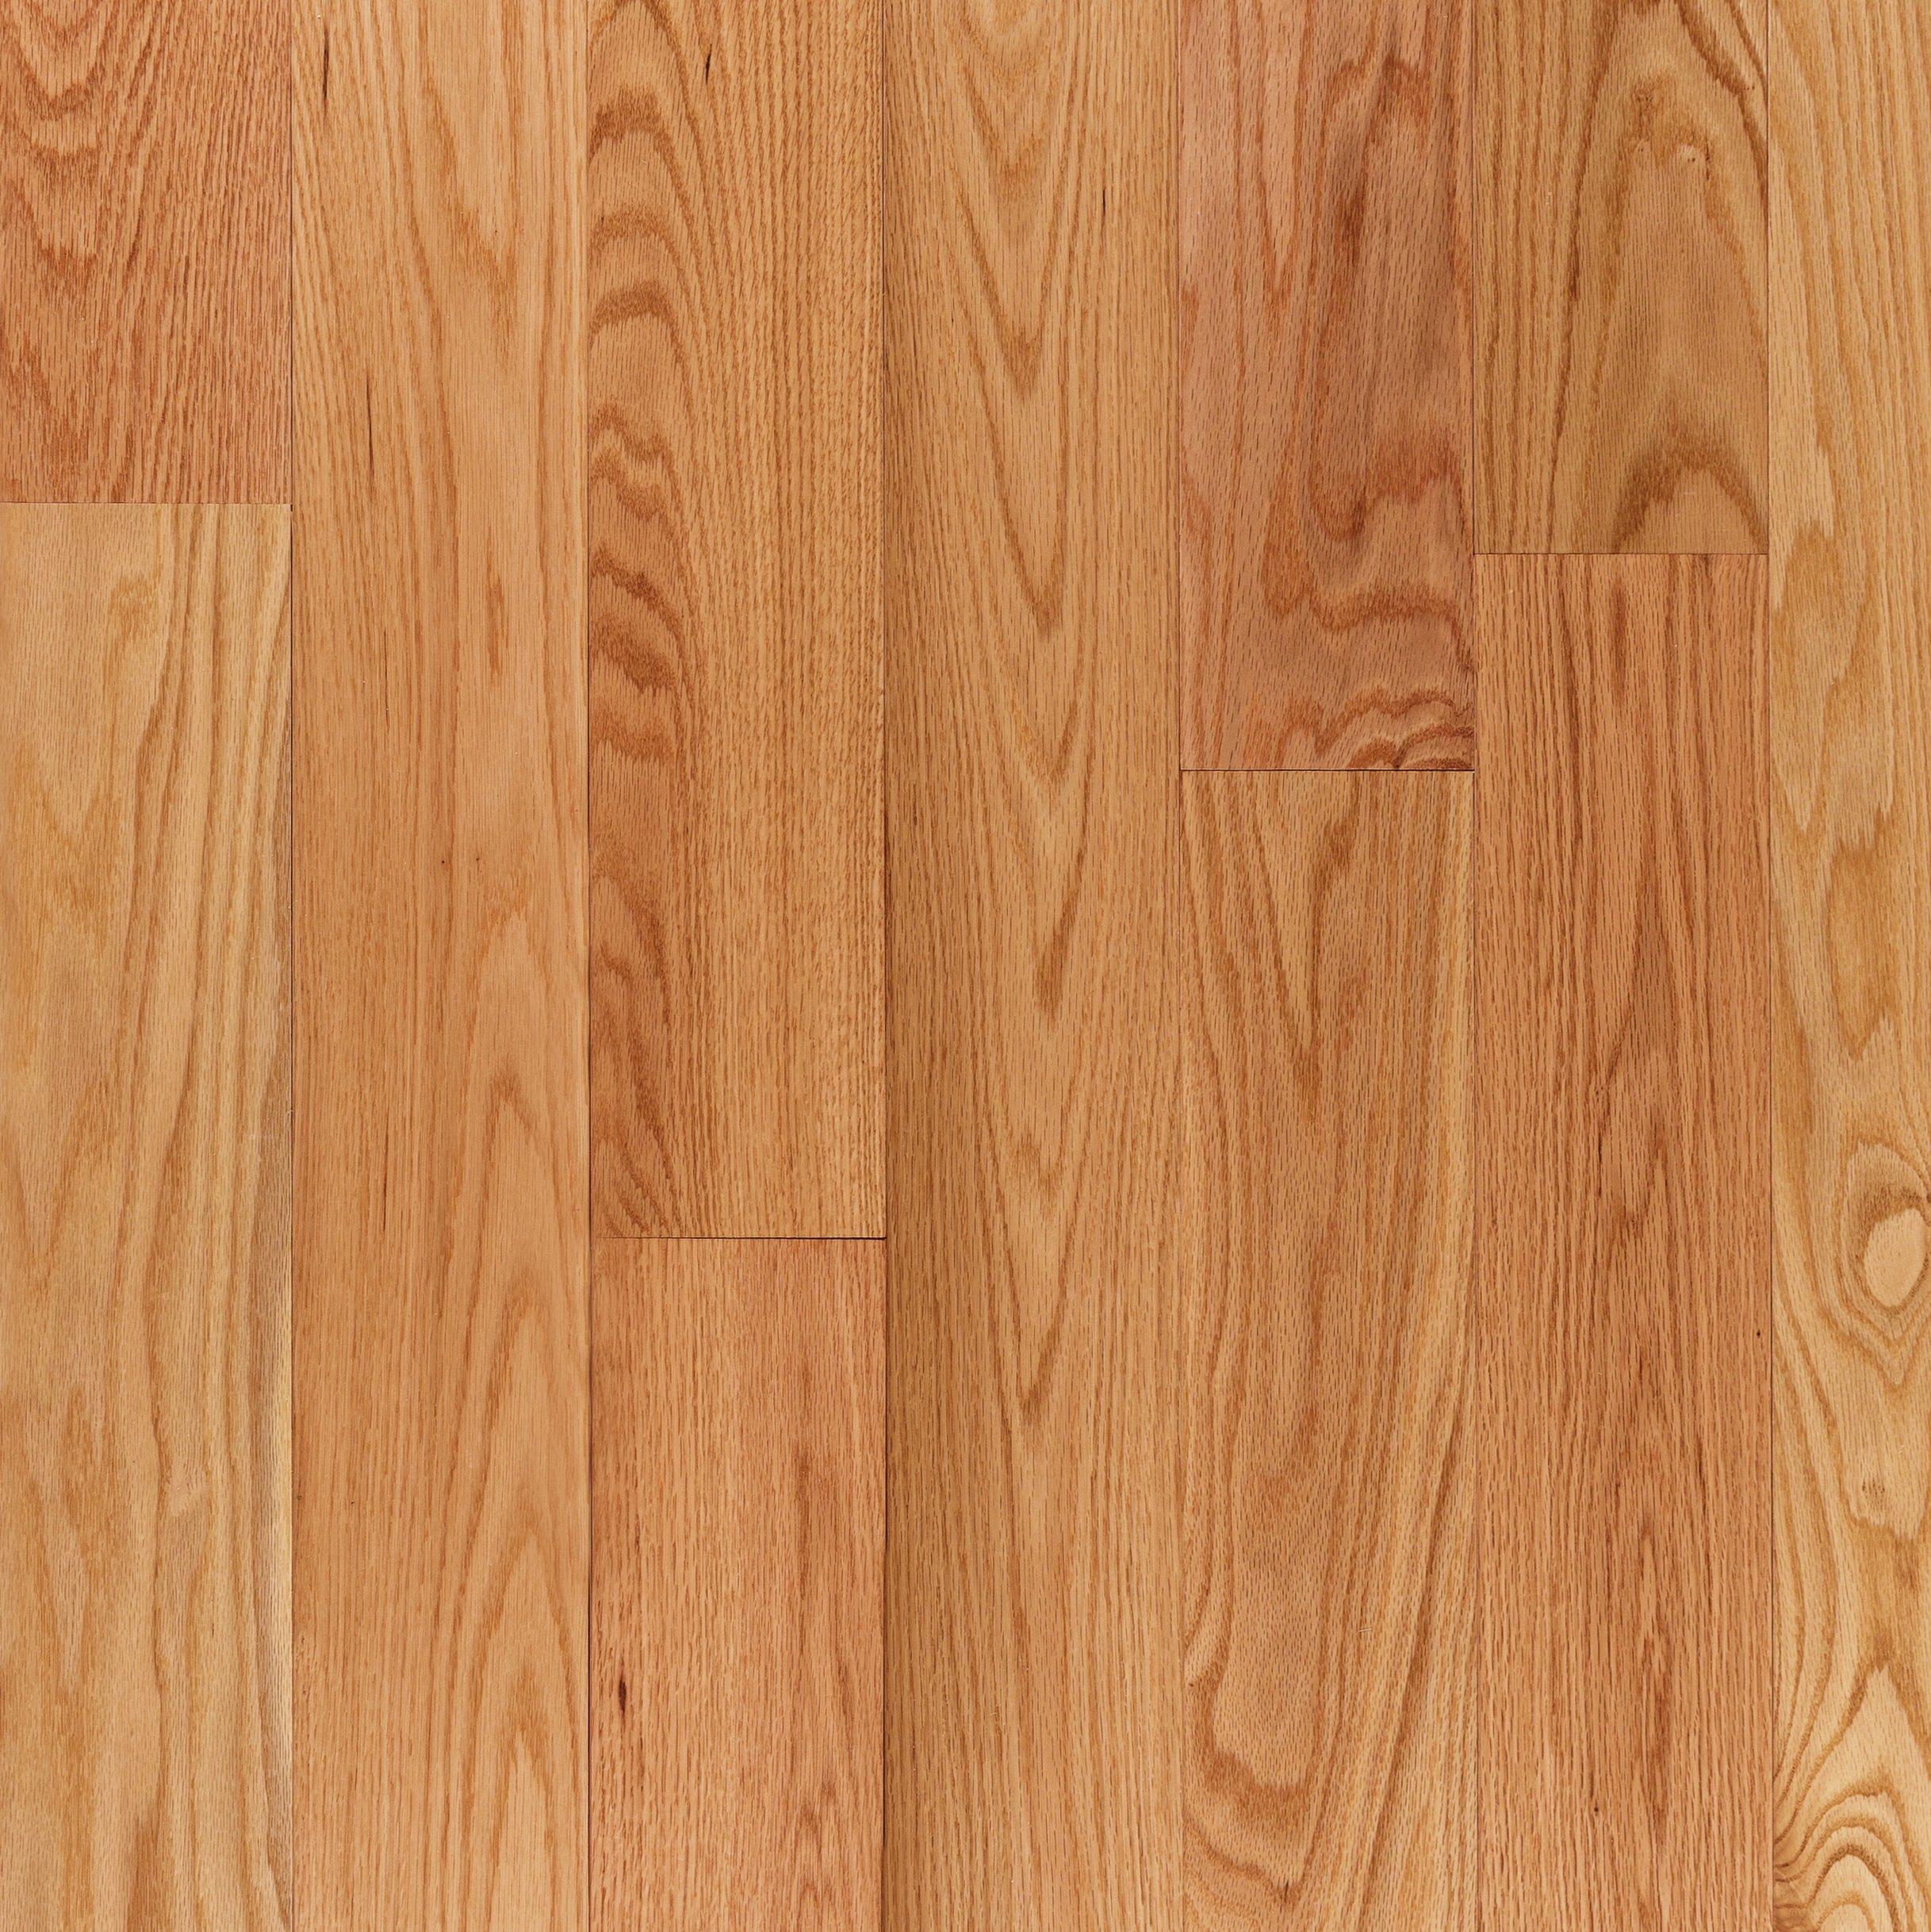 Natural Select Red Oak Smooth Solid Hardwood